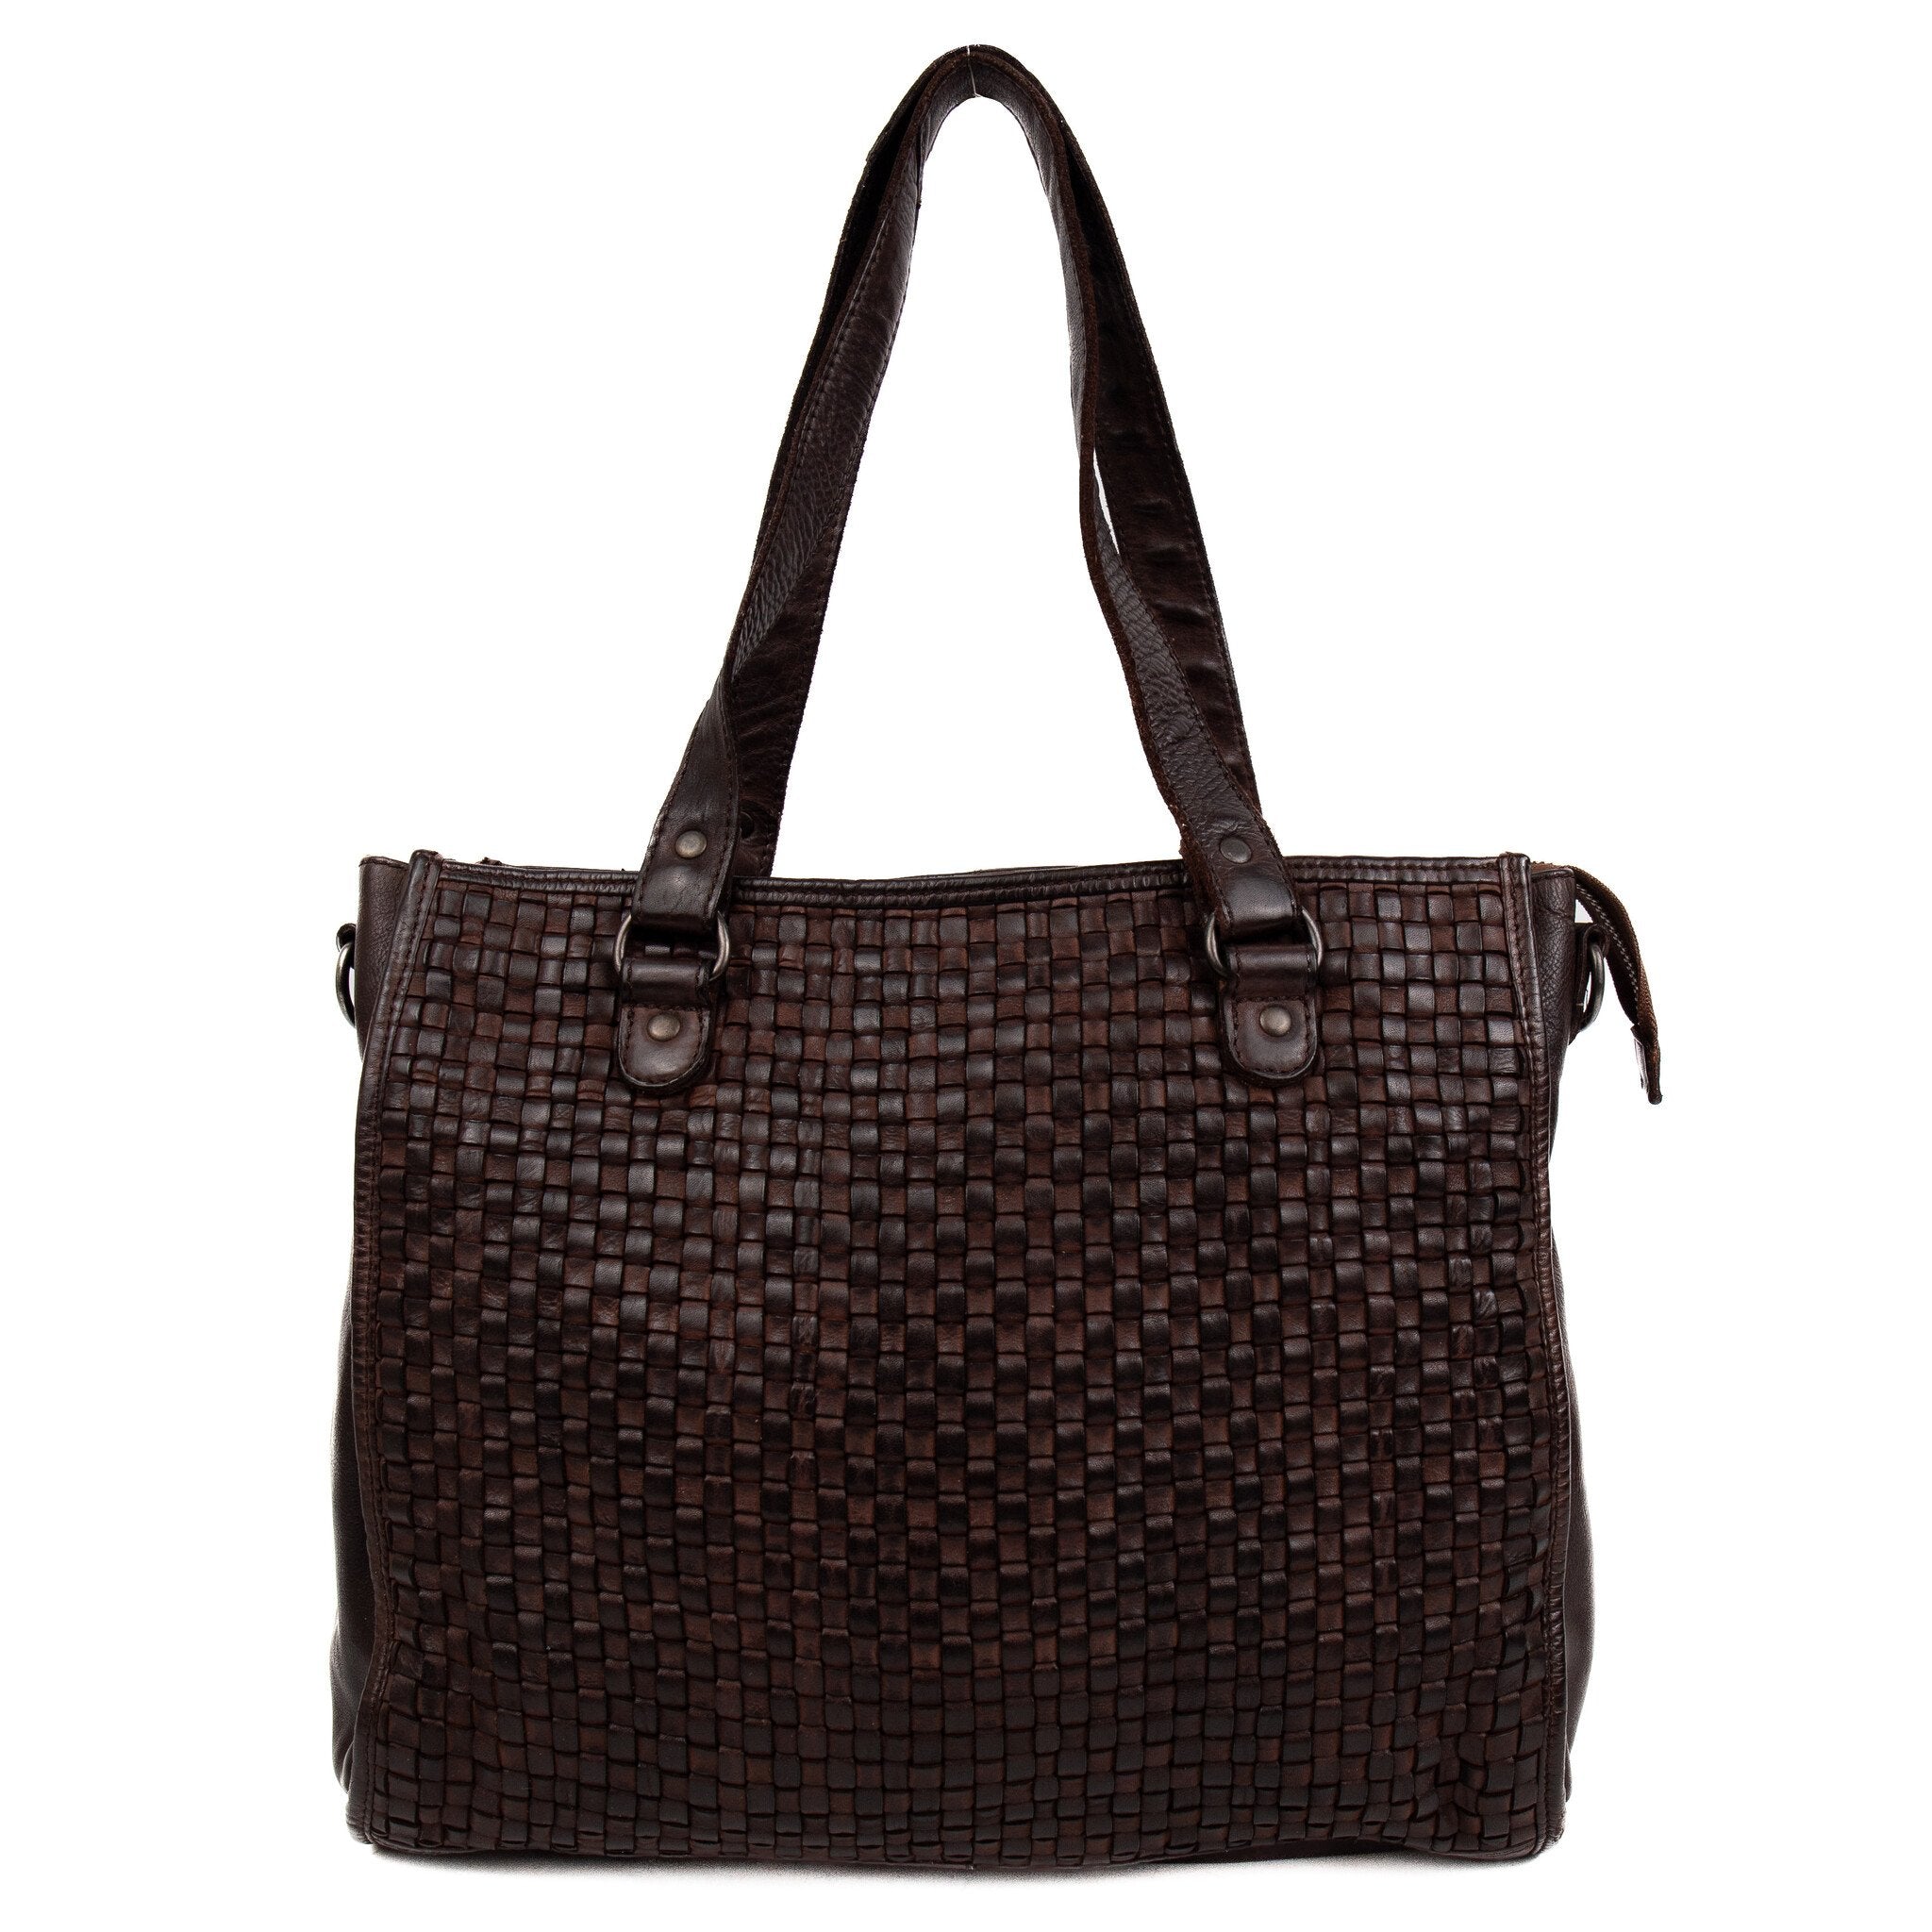 Braided hand/shoulder bag 'Lina' dark brown - CL 43371